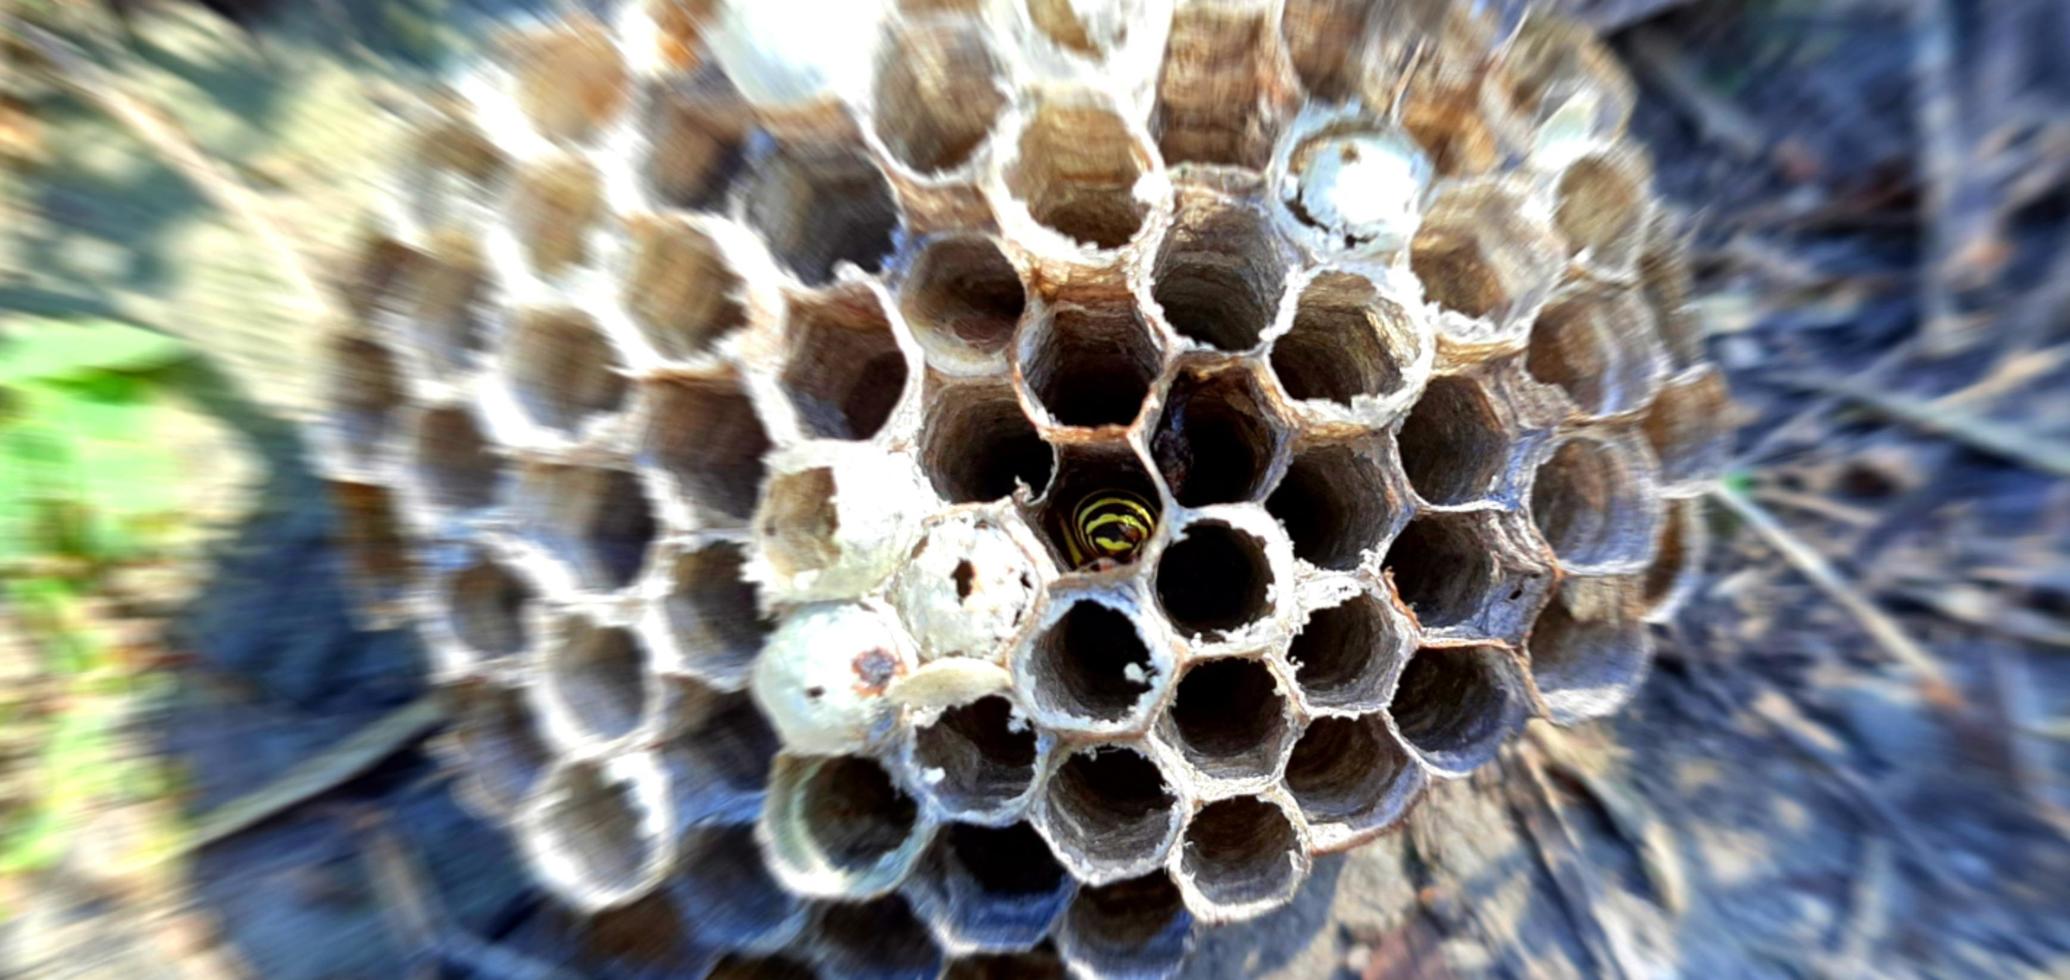 vespas no ninho foto